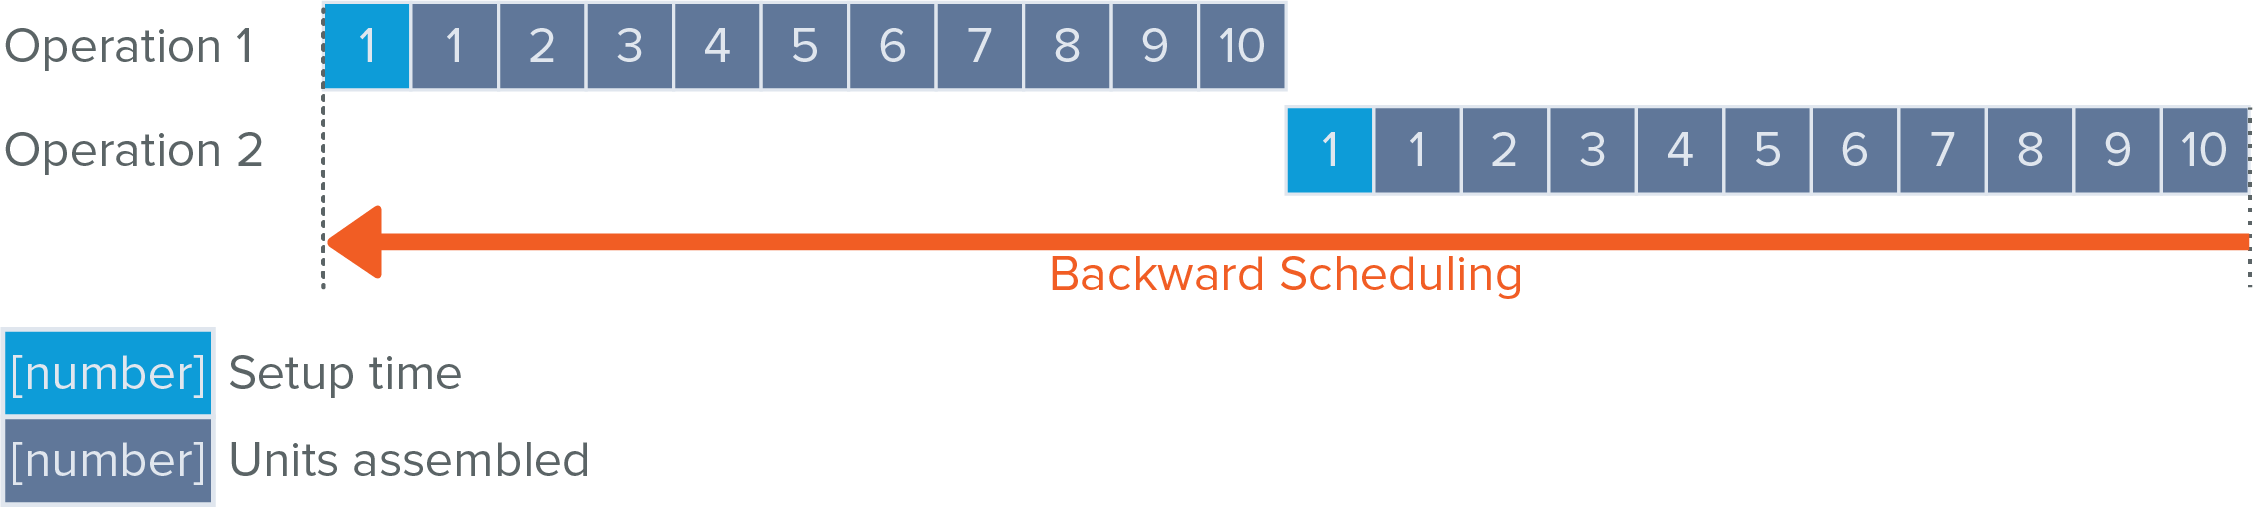 Diagram of backward scheduling workflow.